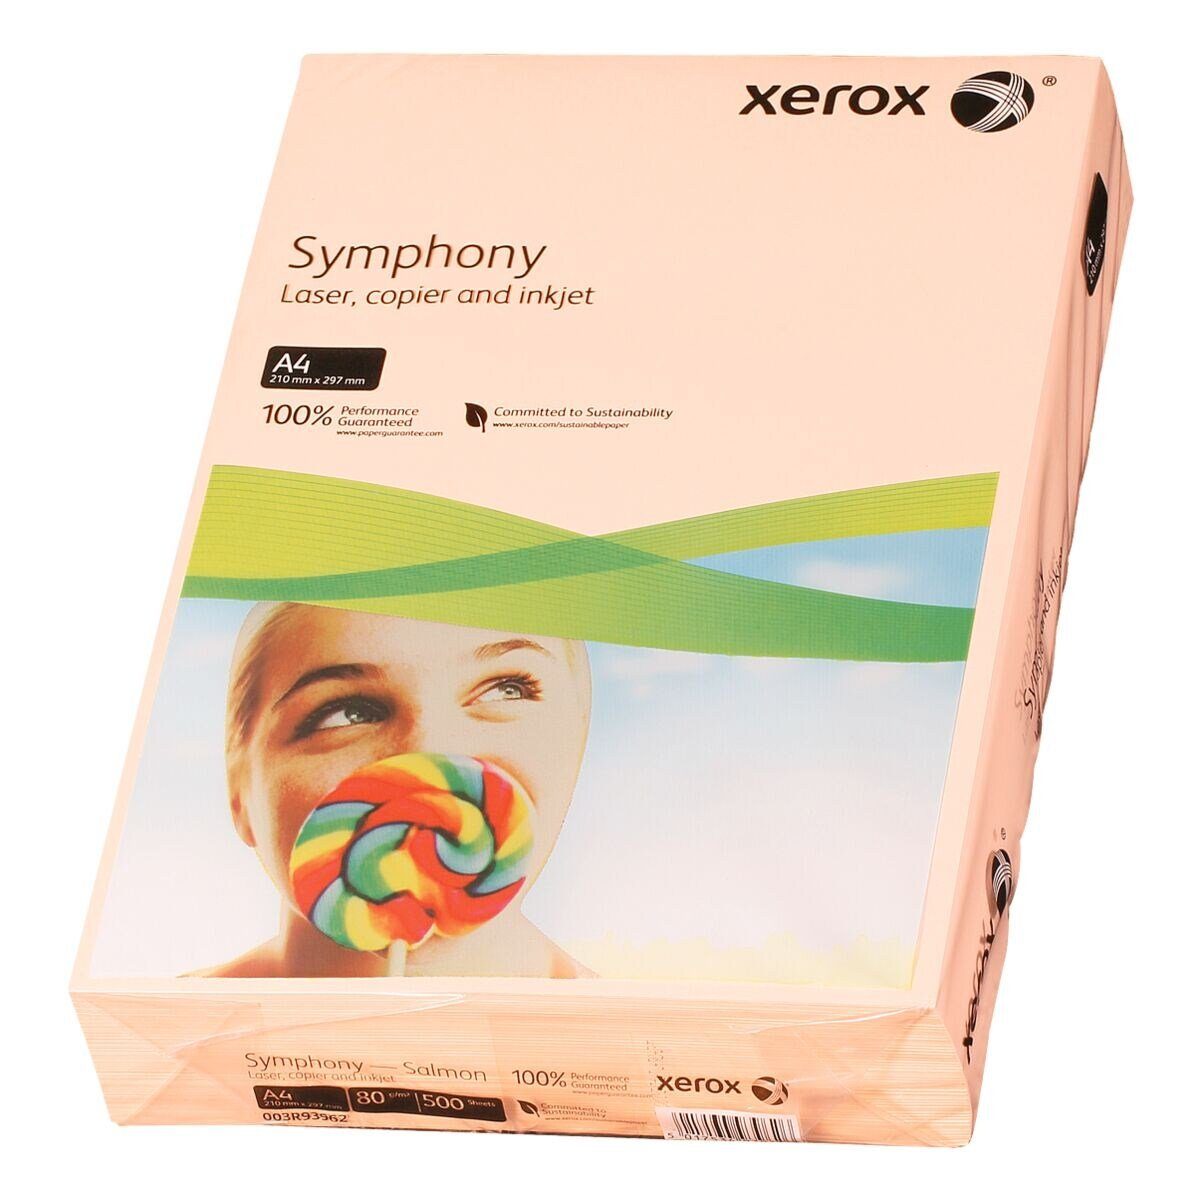 A4, DIN 80 Blatt Drucker- Symphony, Xerox Pastellfarben, lachs g/m², Format Kopierpapier 500 und